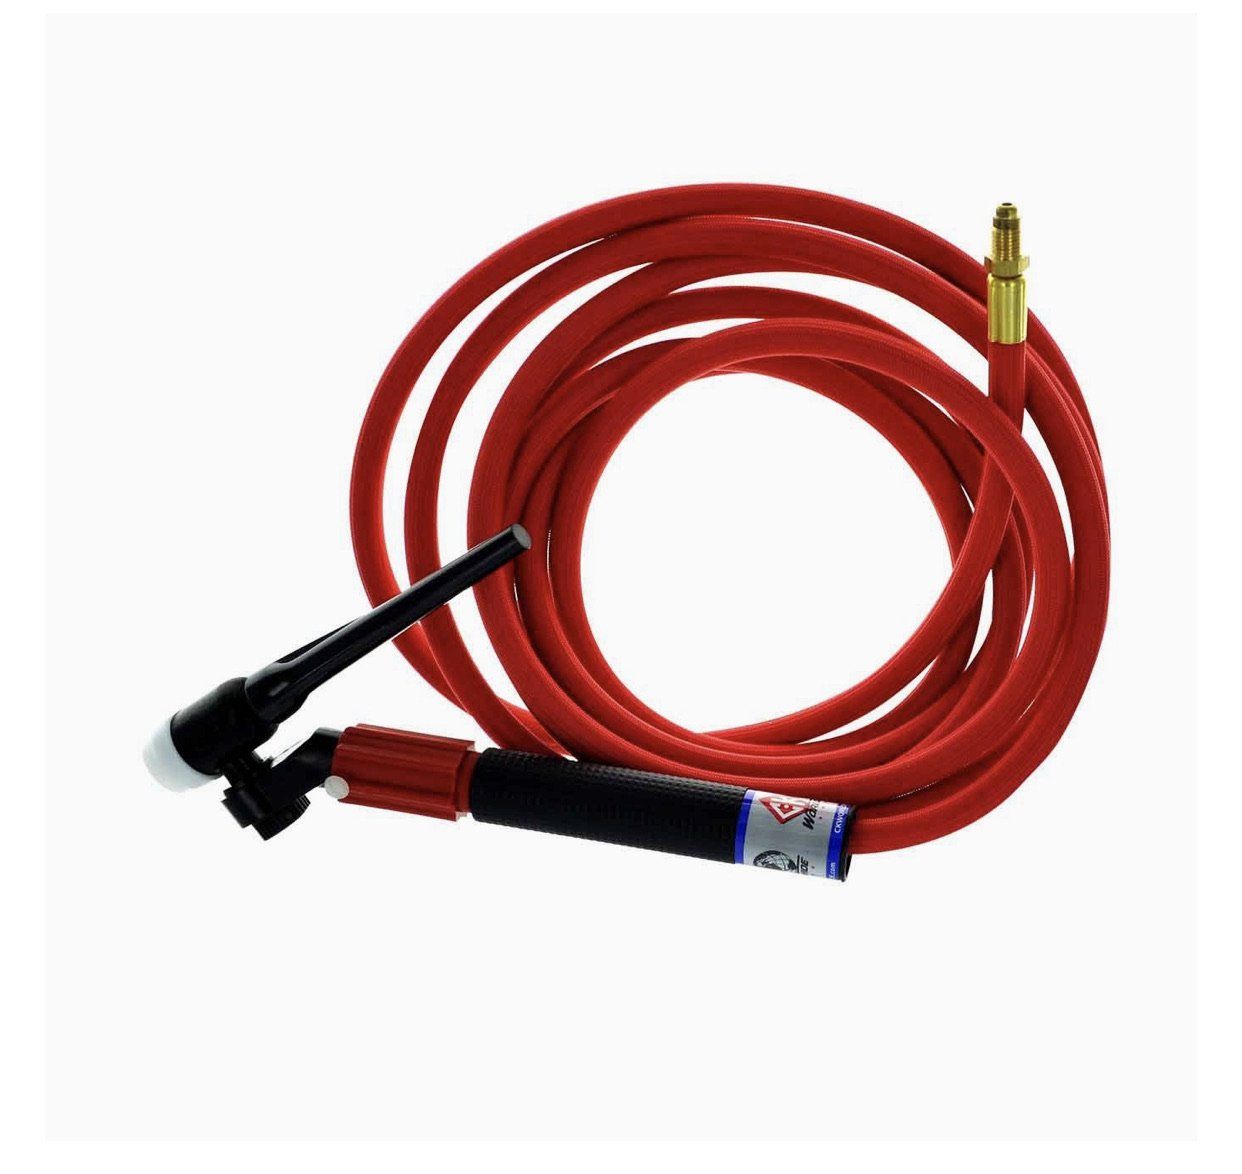 *CK Worldwide | TIG Torch #17 - 3 Series FL150 (Gas Cooled) (CK-FL1512VSF) W/ Valve, 12.5ft. Super Flex Cable